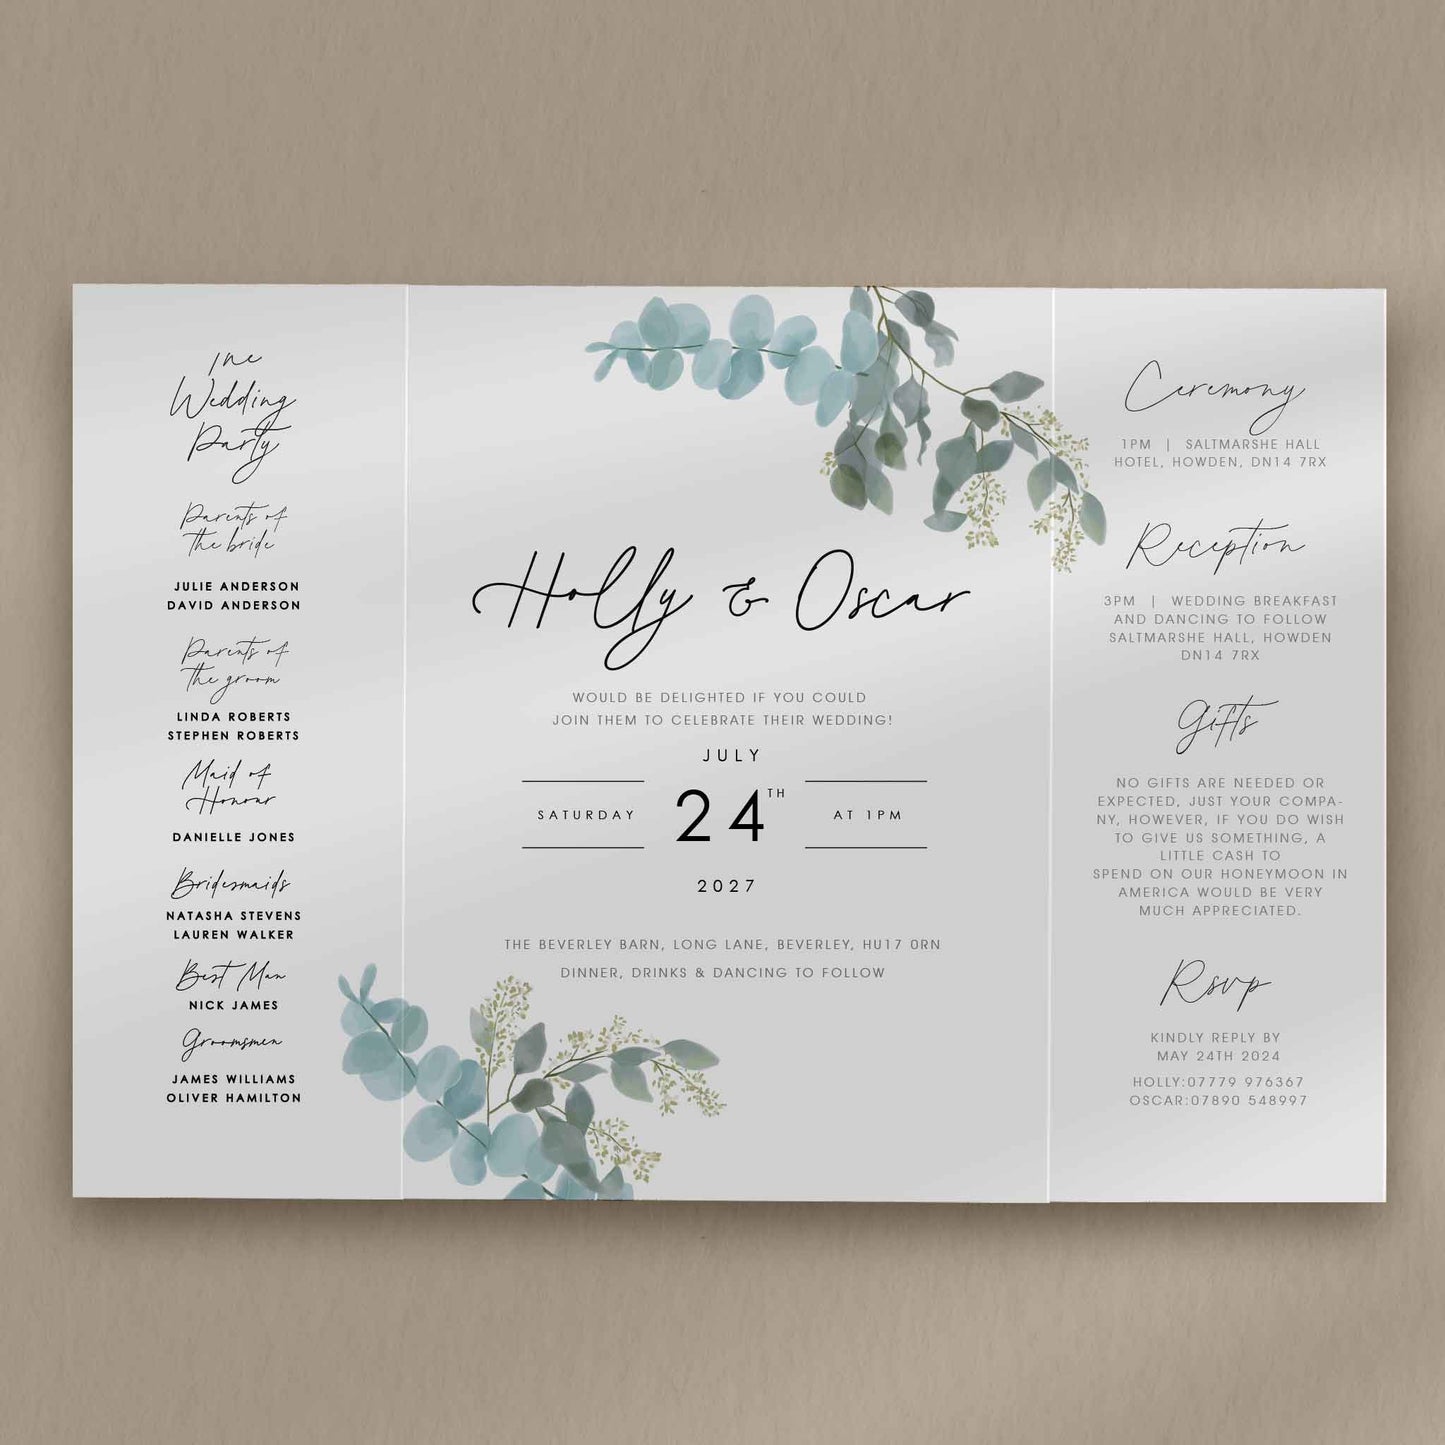 Holly Gatefold Invitation  Ivy and Gold Wedding Stationery   